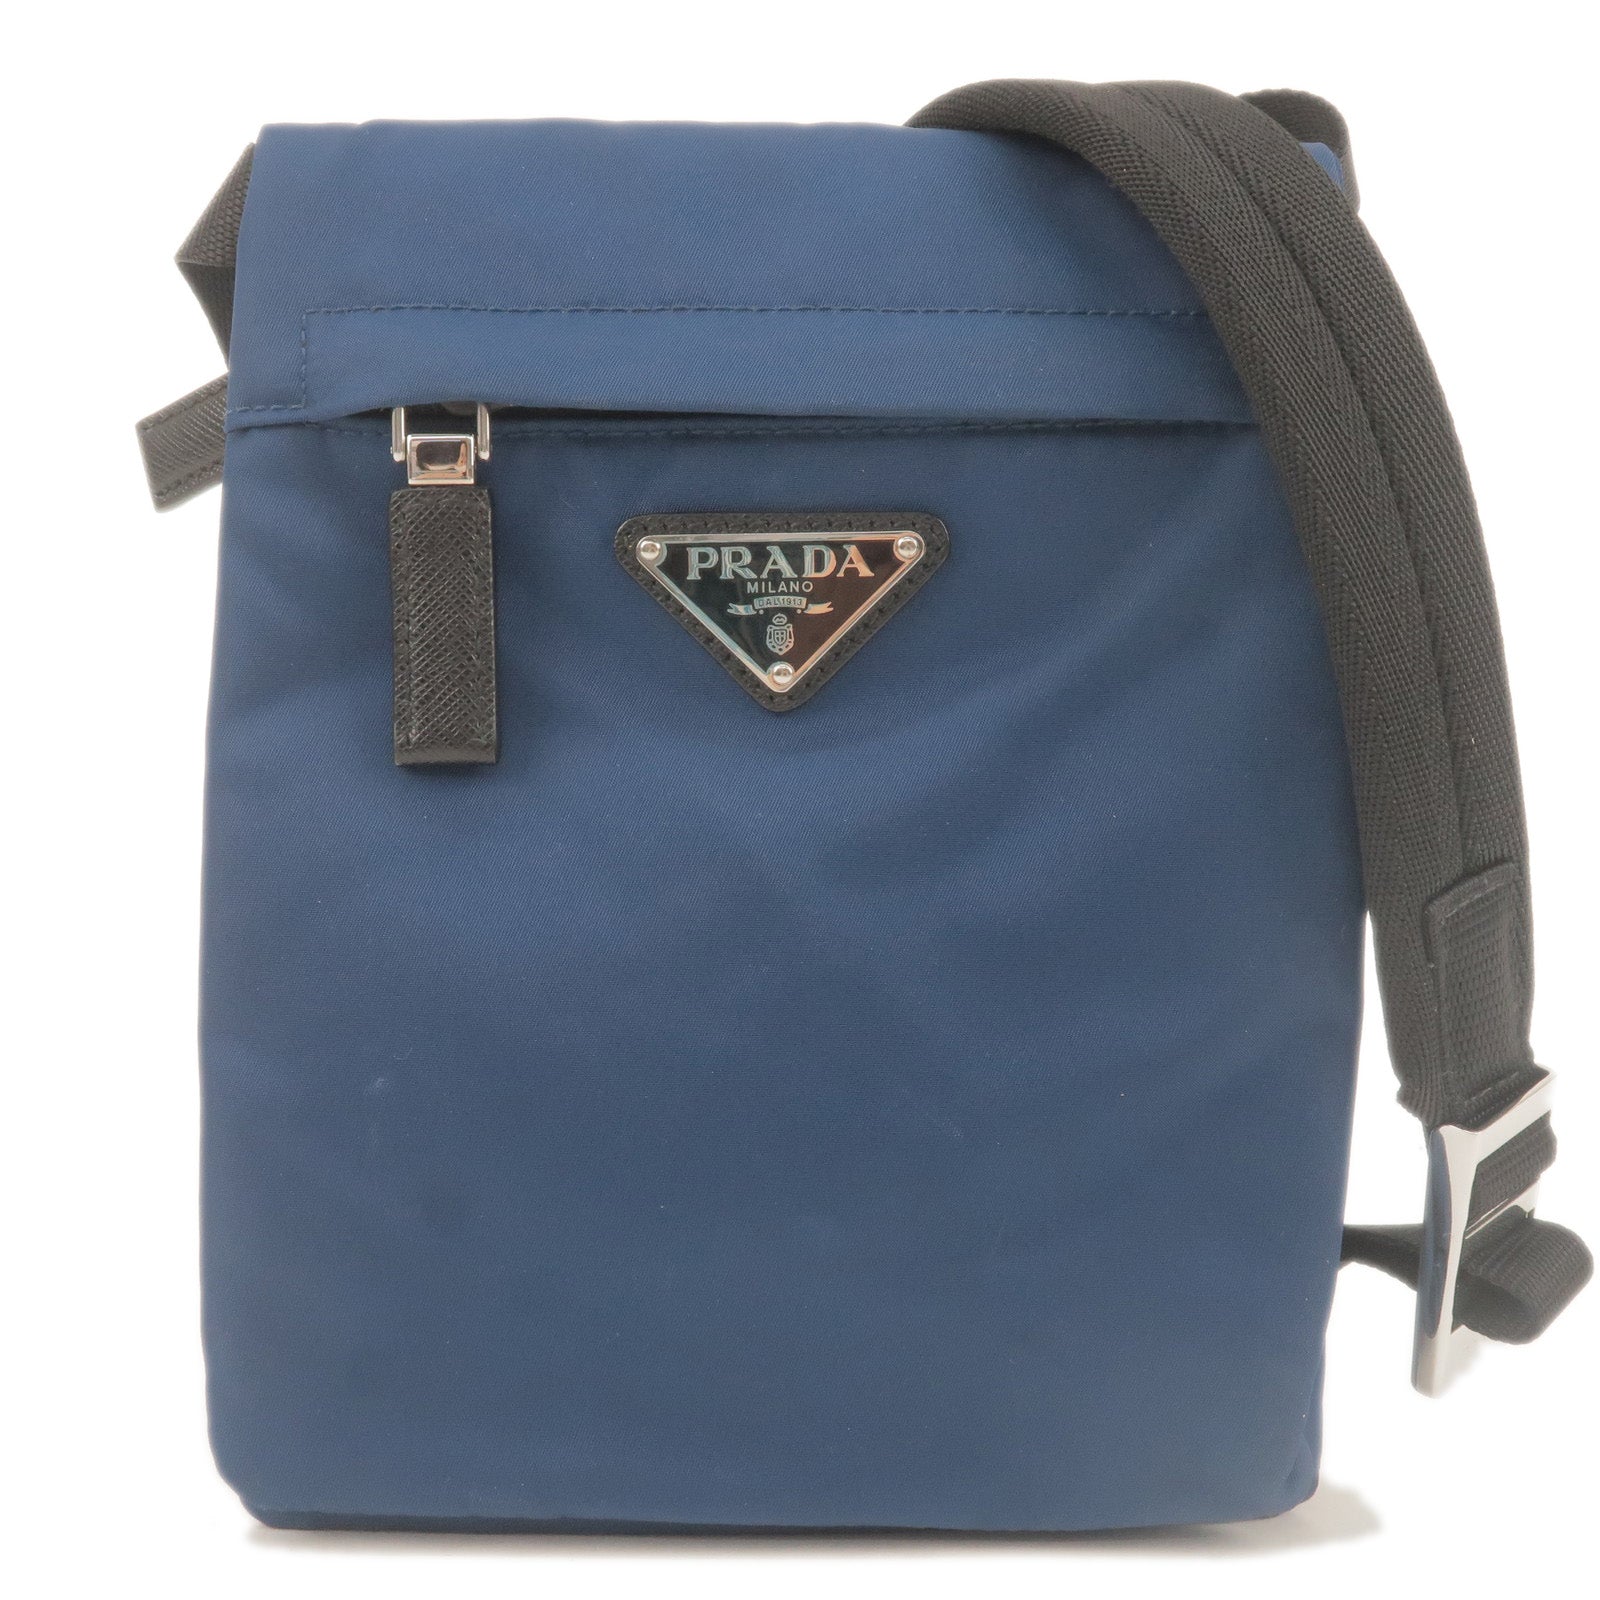 PRADA-Nylon-Leather-Shoulder-Bag-Purse-Blue-Black